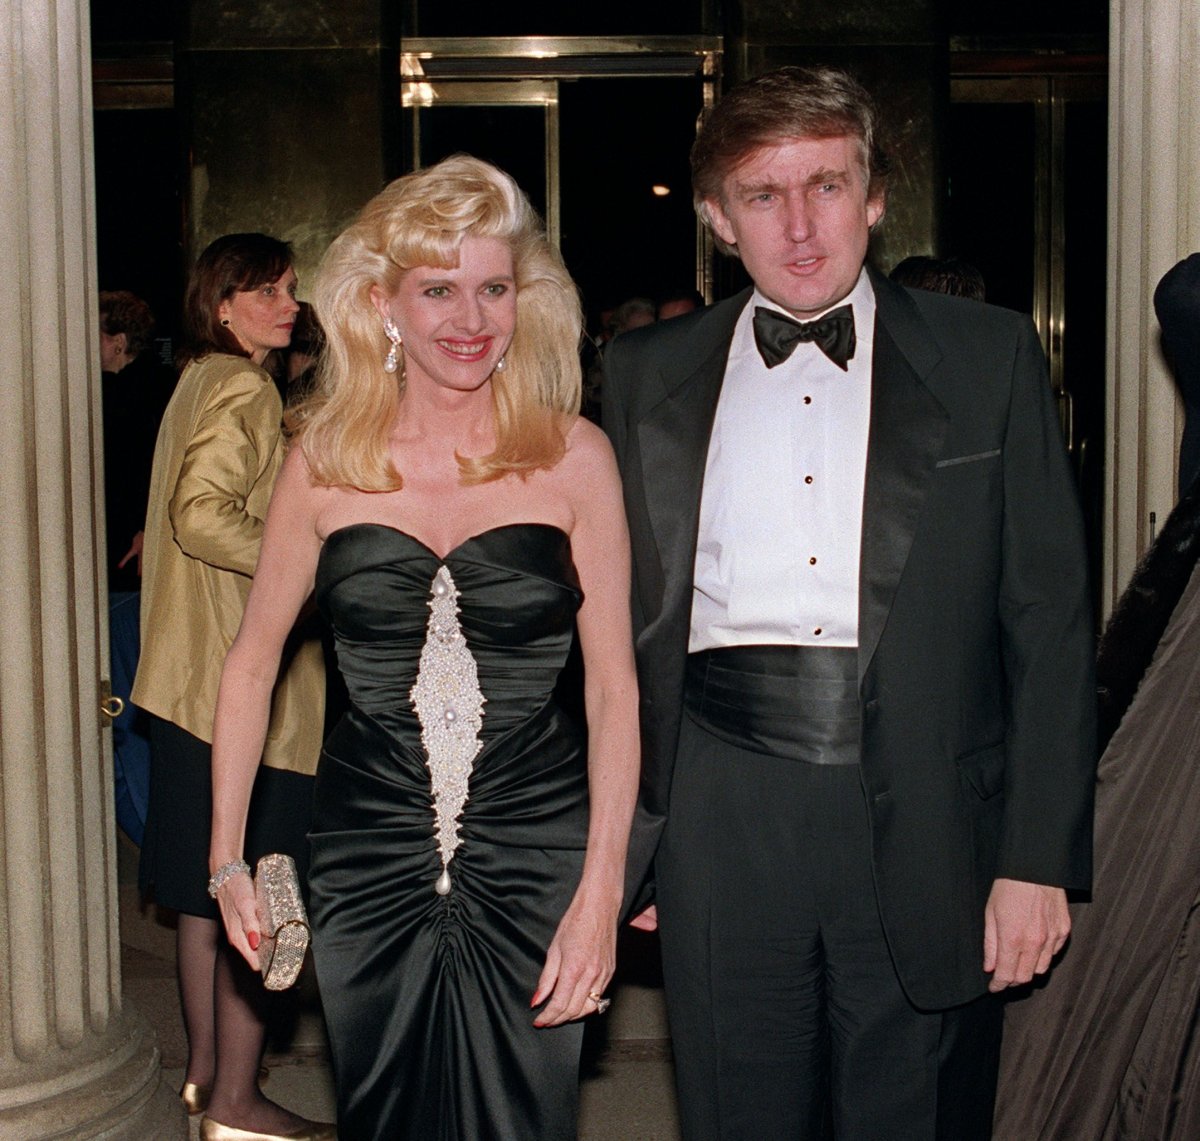 Trump and Ivana Trump